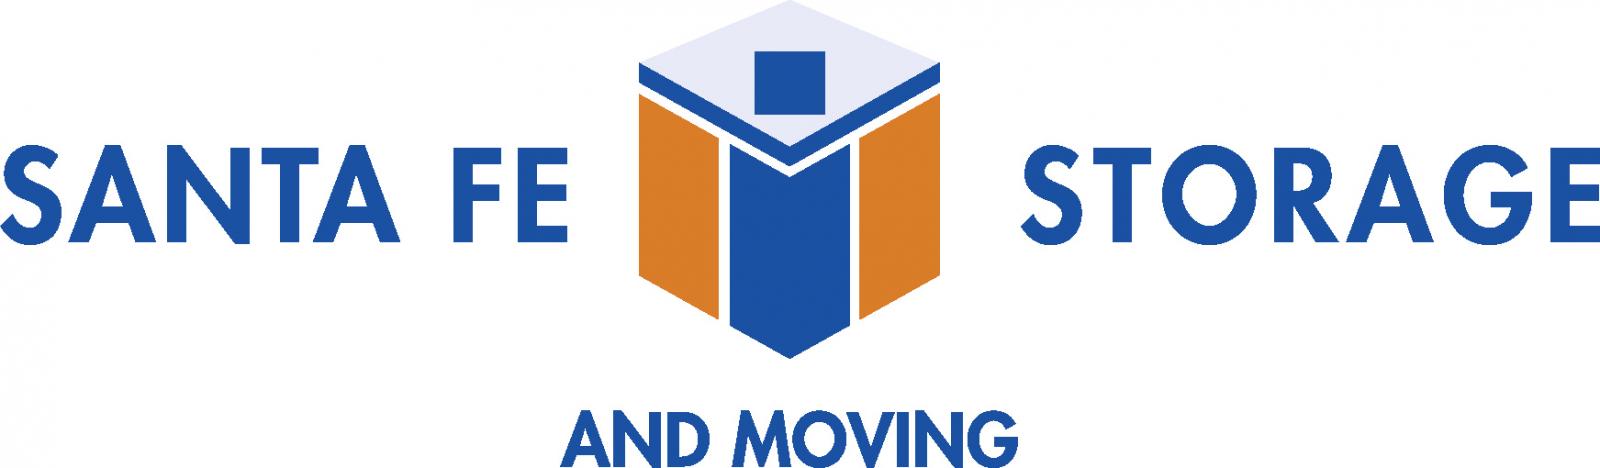 Santa Fe Storage and Moving logo